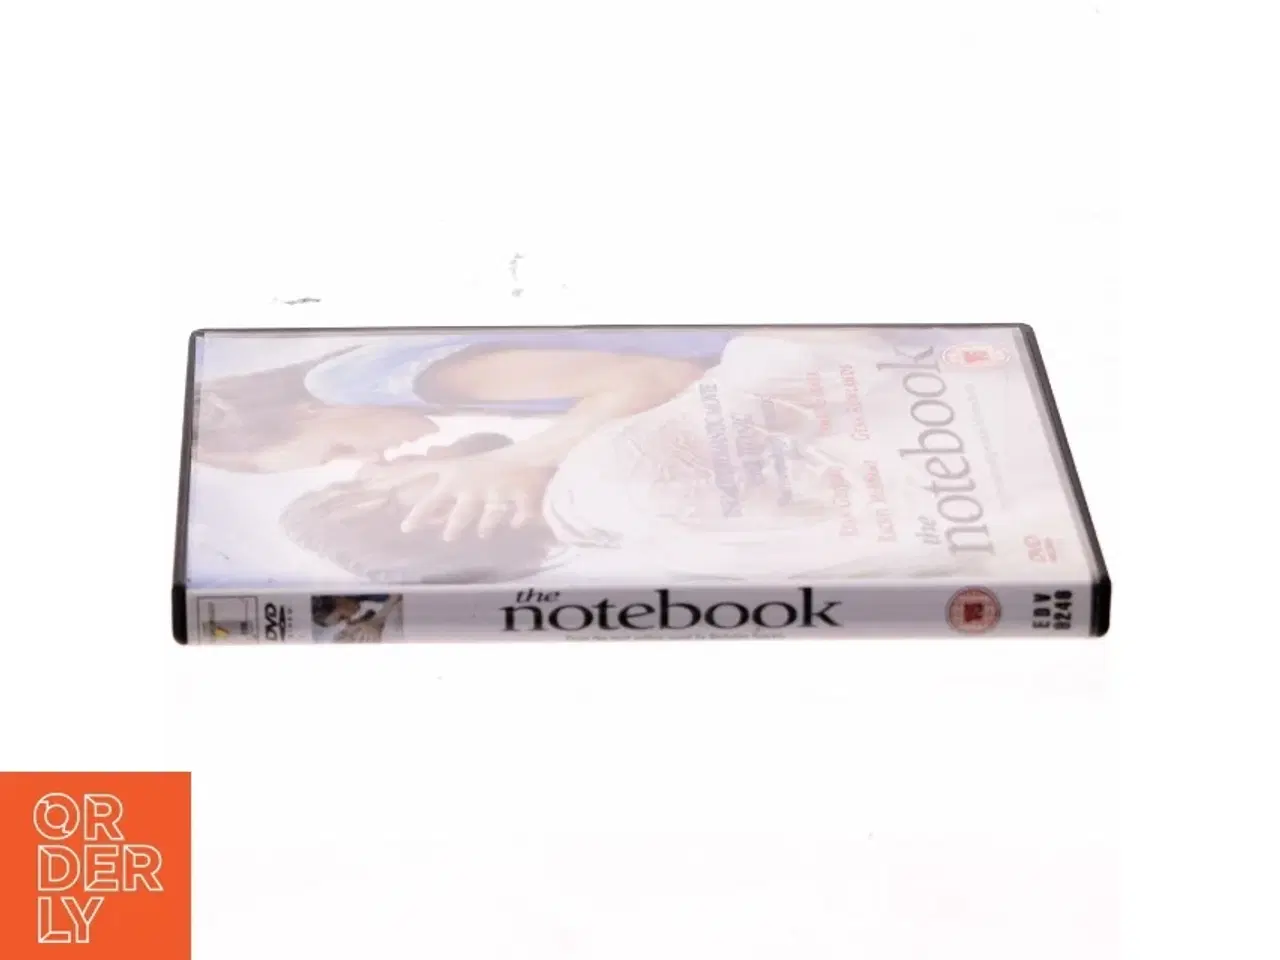 Billede 2 - The notebook